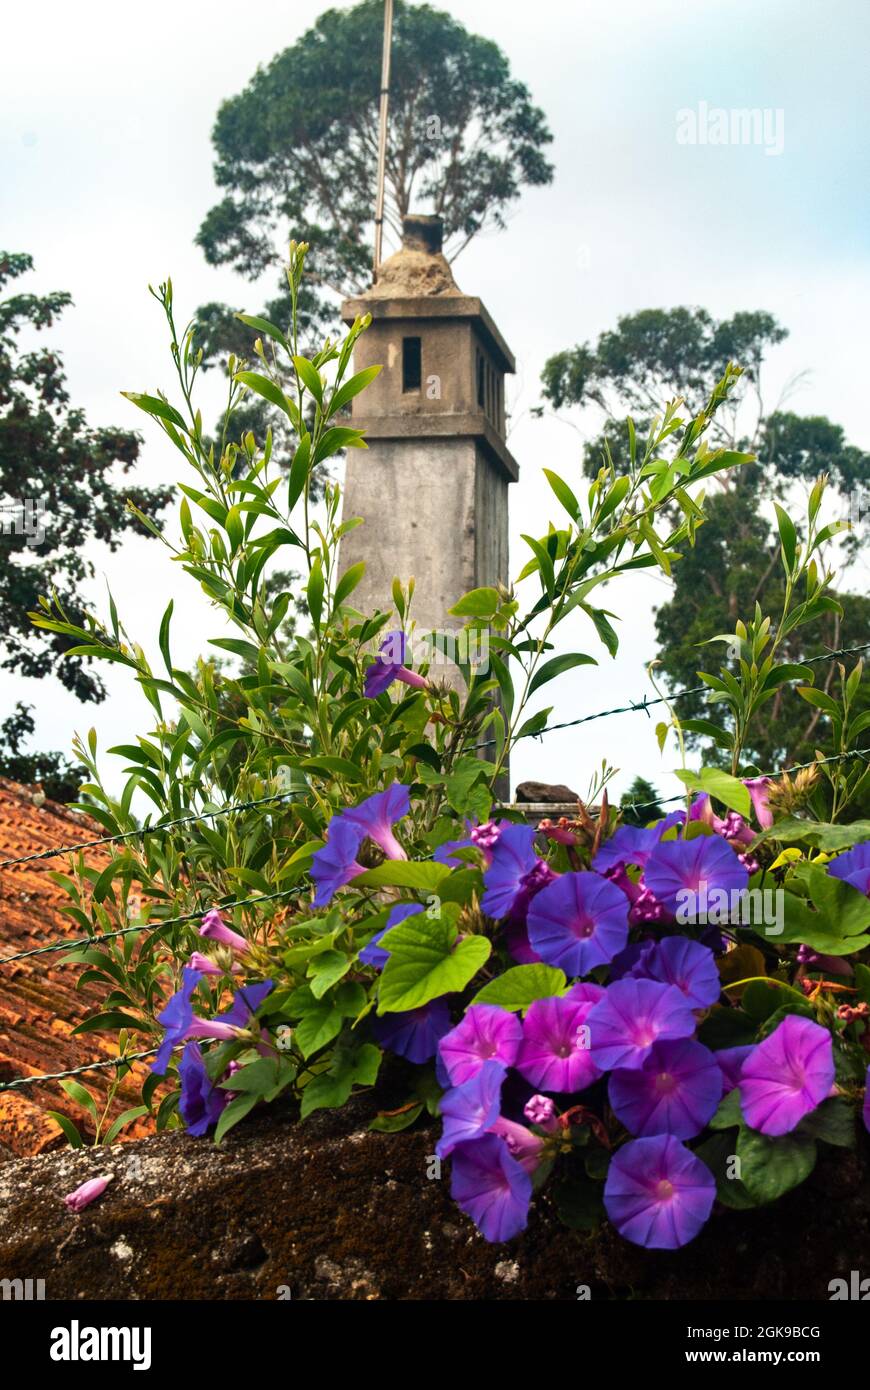 Komposition aus Morning Glory Blumen und einem alten Kamin - Ipomoea purpurea, Viana do Castelo, Portugal, Vertikal, Selektiver Fokus Stockfoto